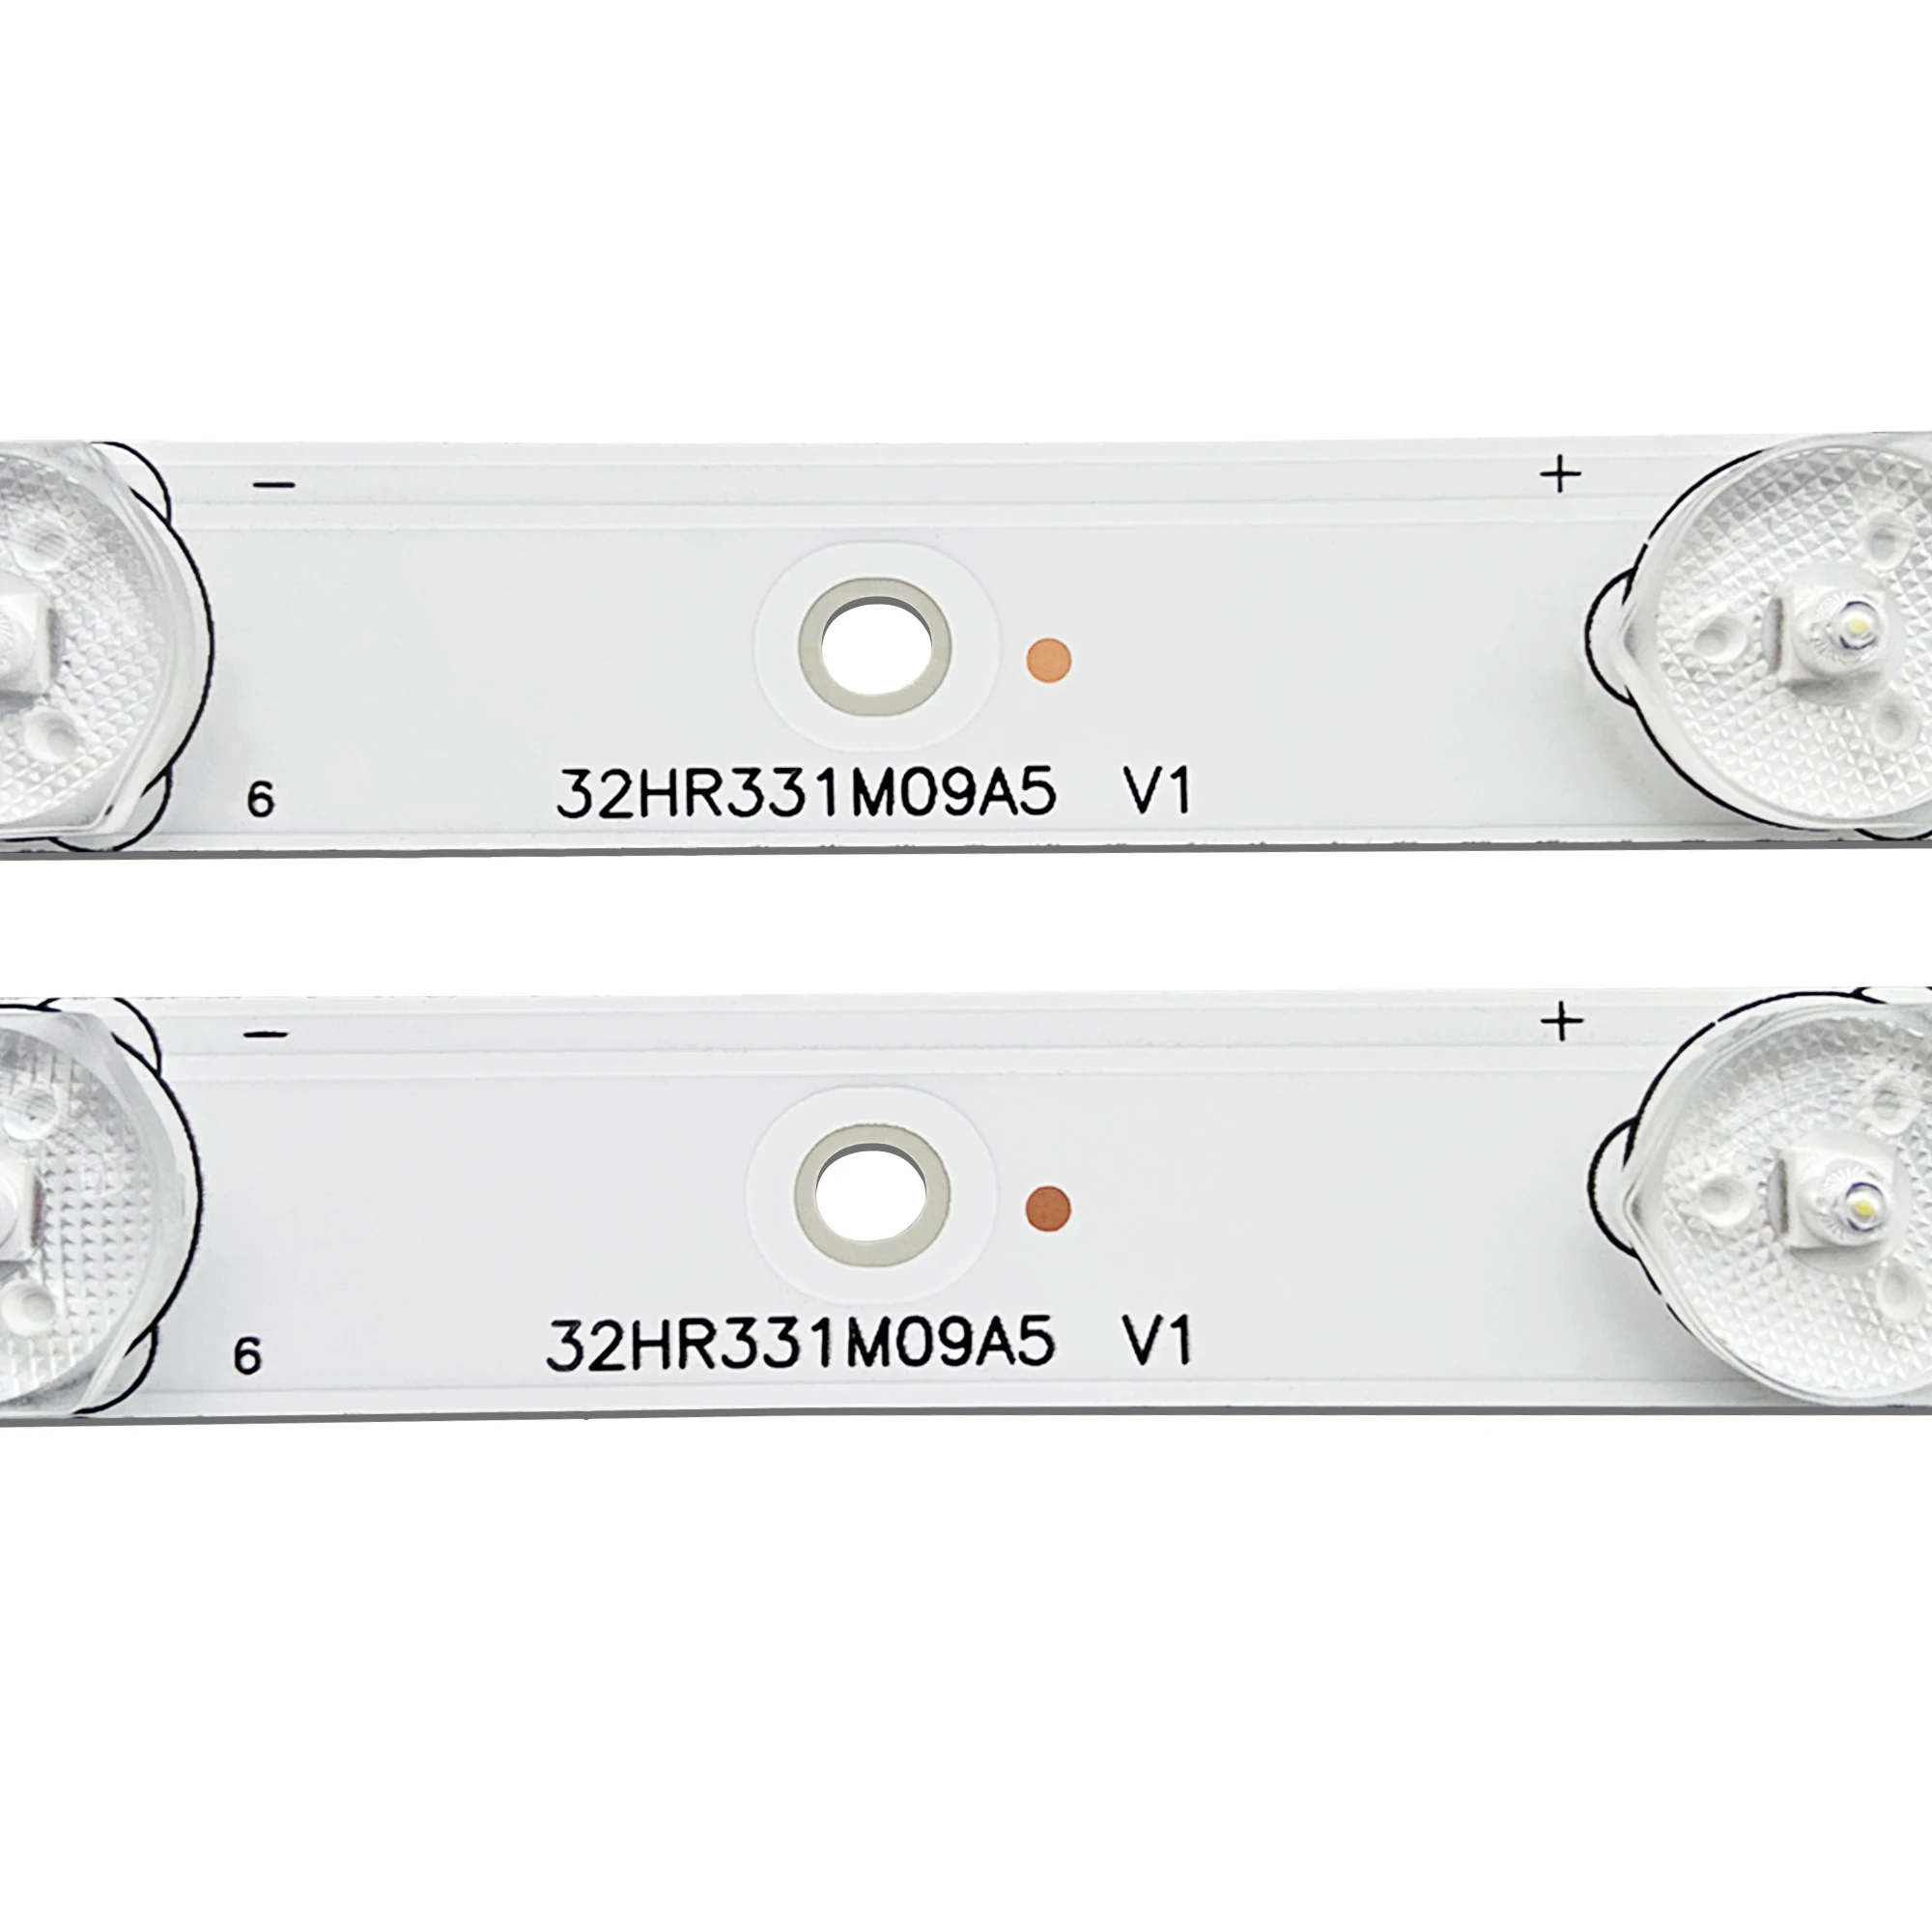 

（New kit）2pieces/set LED Backlight strip For D32TS7202 bar light 32HR331M09A5 V1 Led strip 1pcs=580MM 9Led lamps